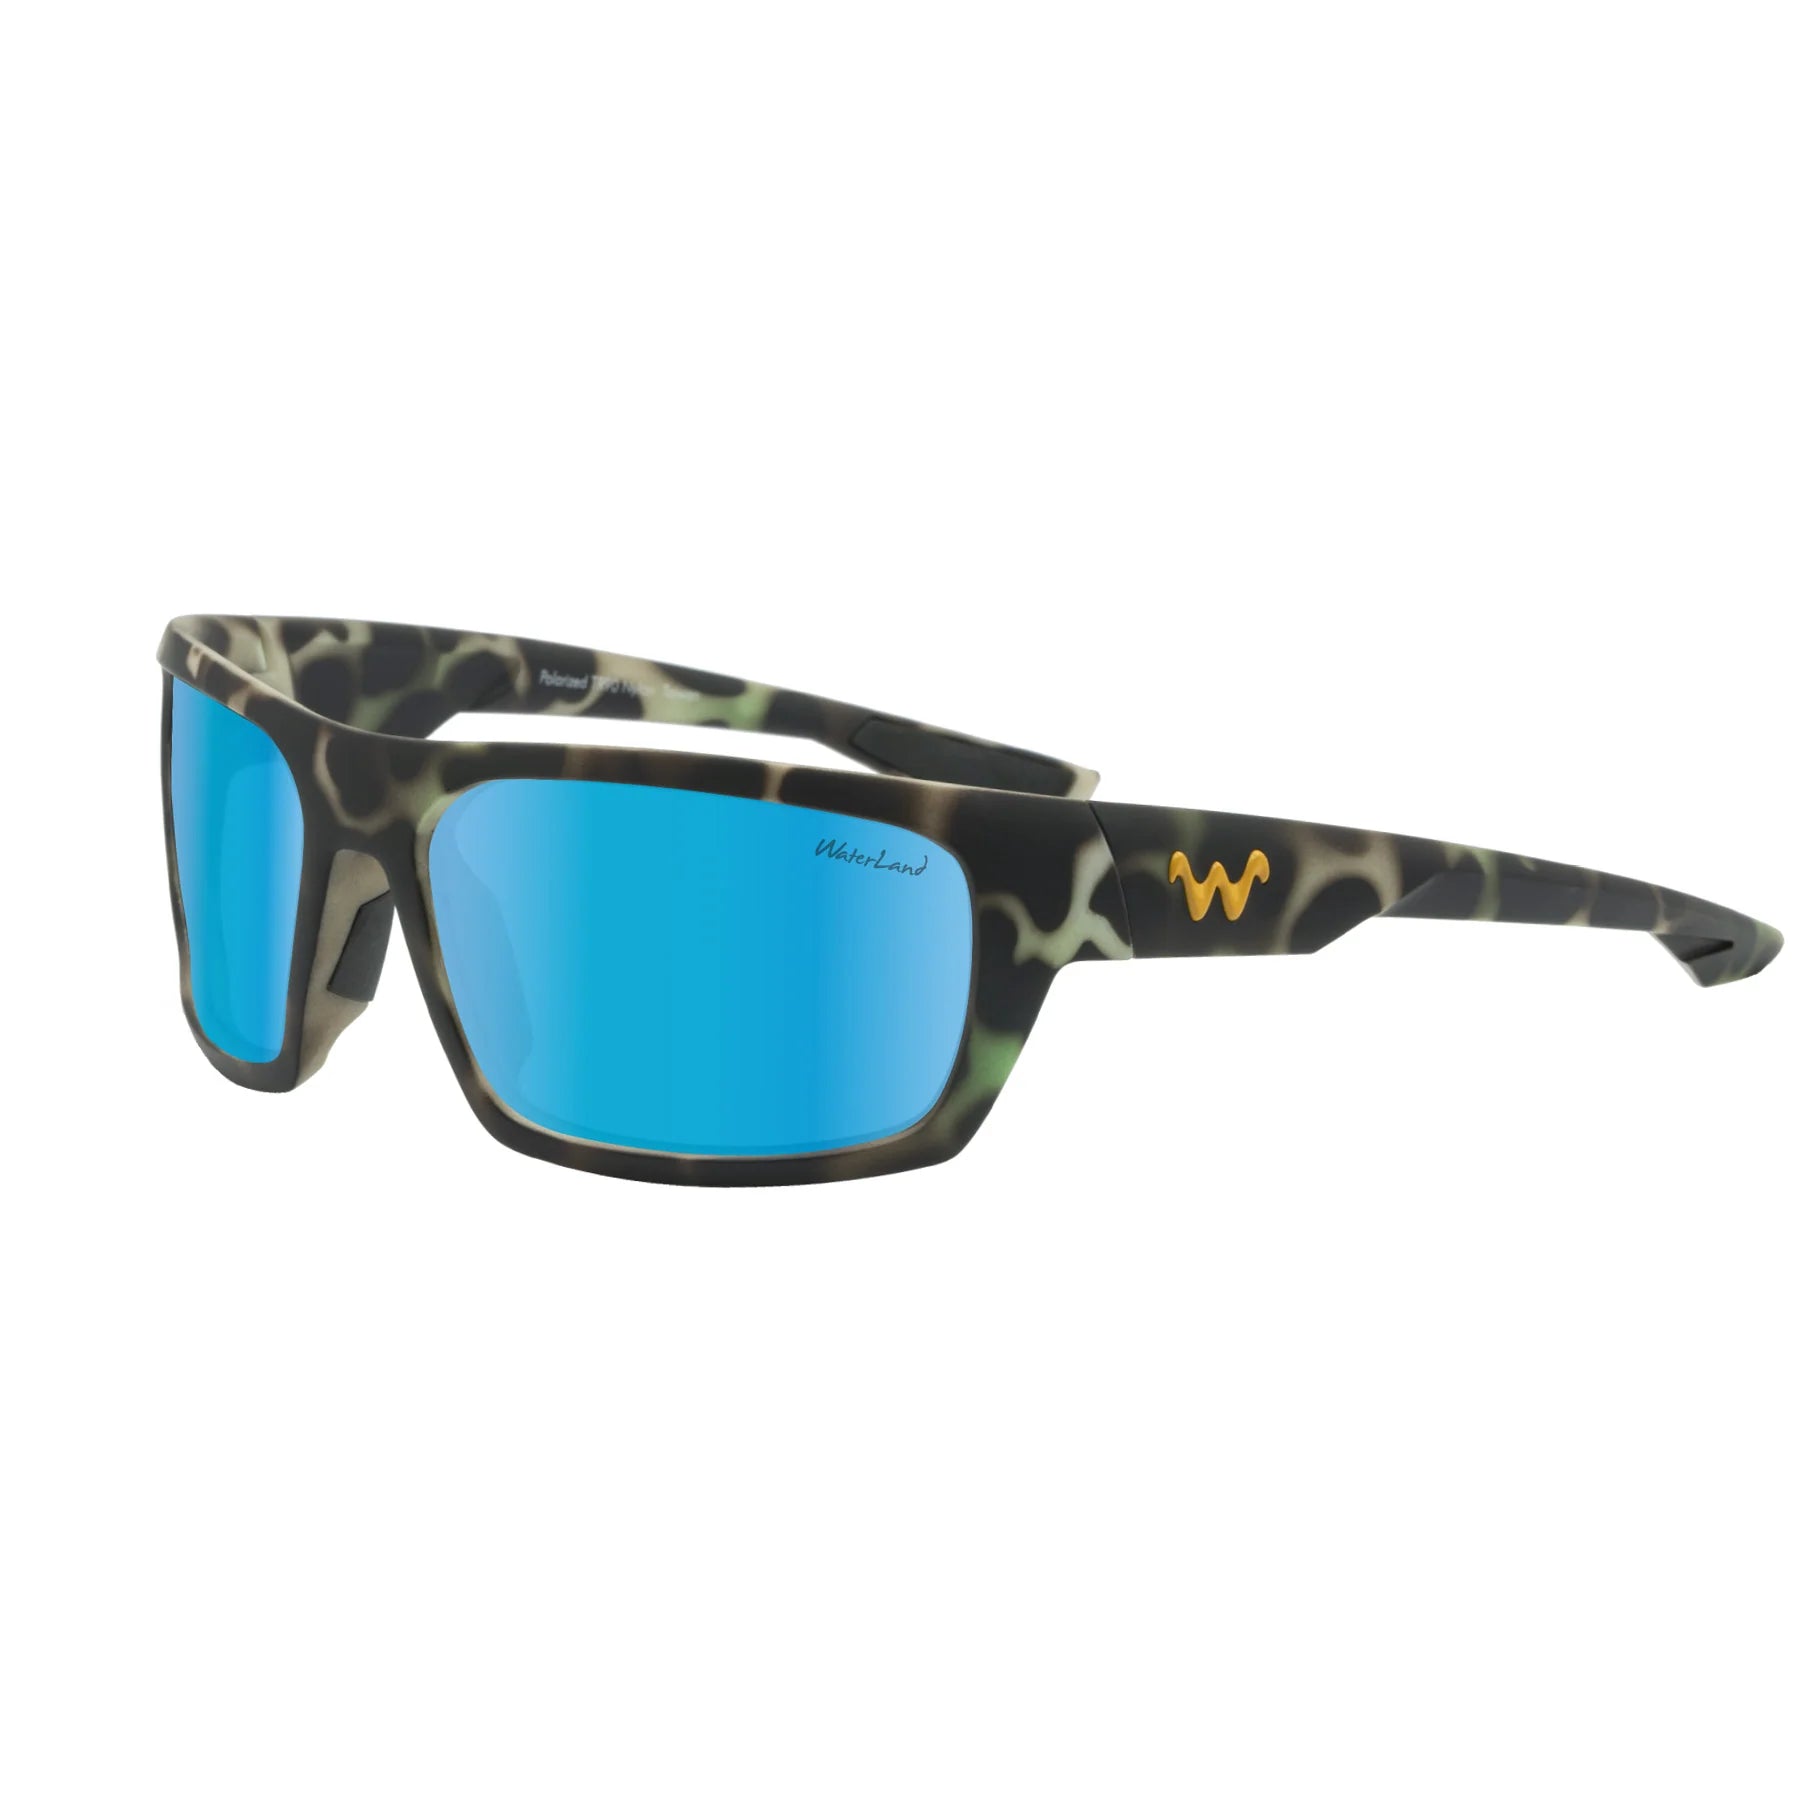 Waterland Milliken Sunglasses Mineral Glass / WaterWood / Blue Mirror